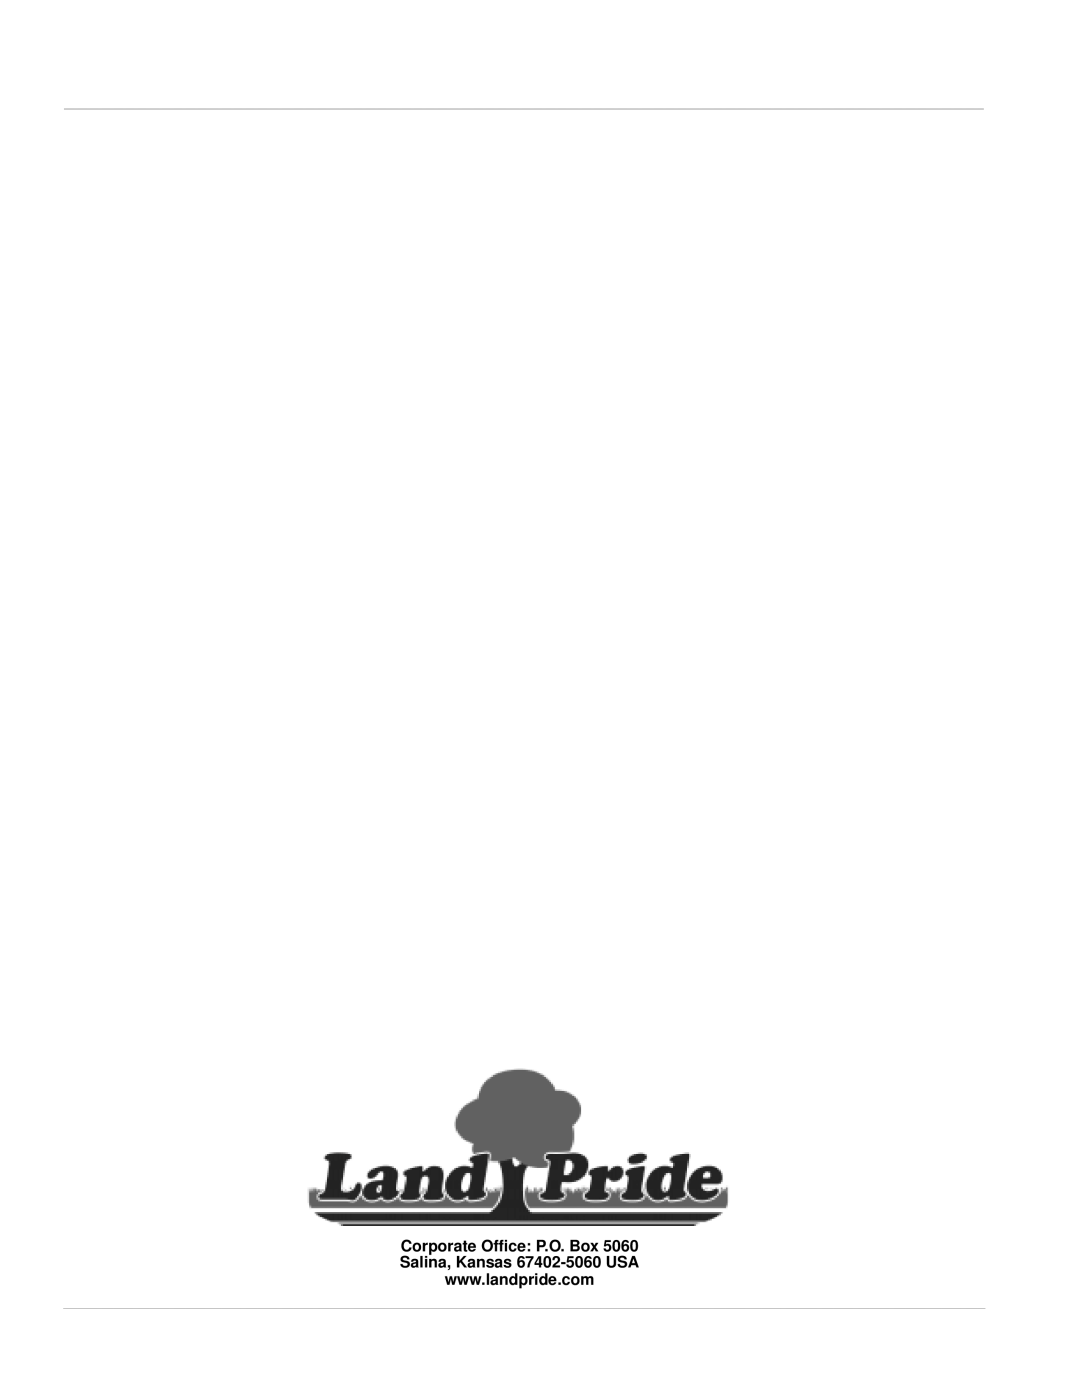 Land Pride Rear Blades, RBT1560, RBT1572 & RBT1584 manual Corporate Ofﬁce: P.O. Box 